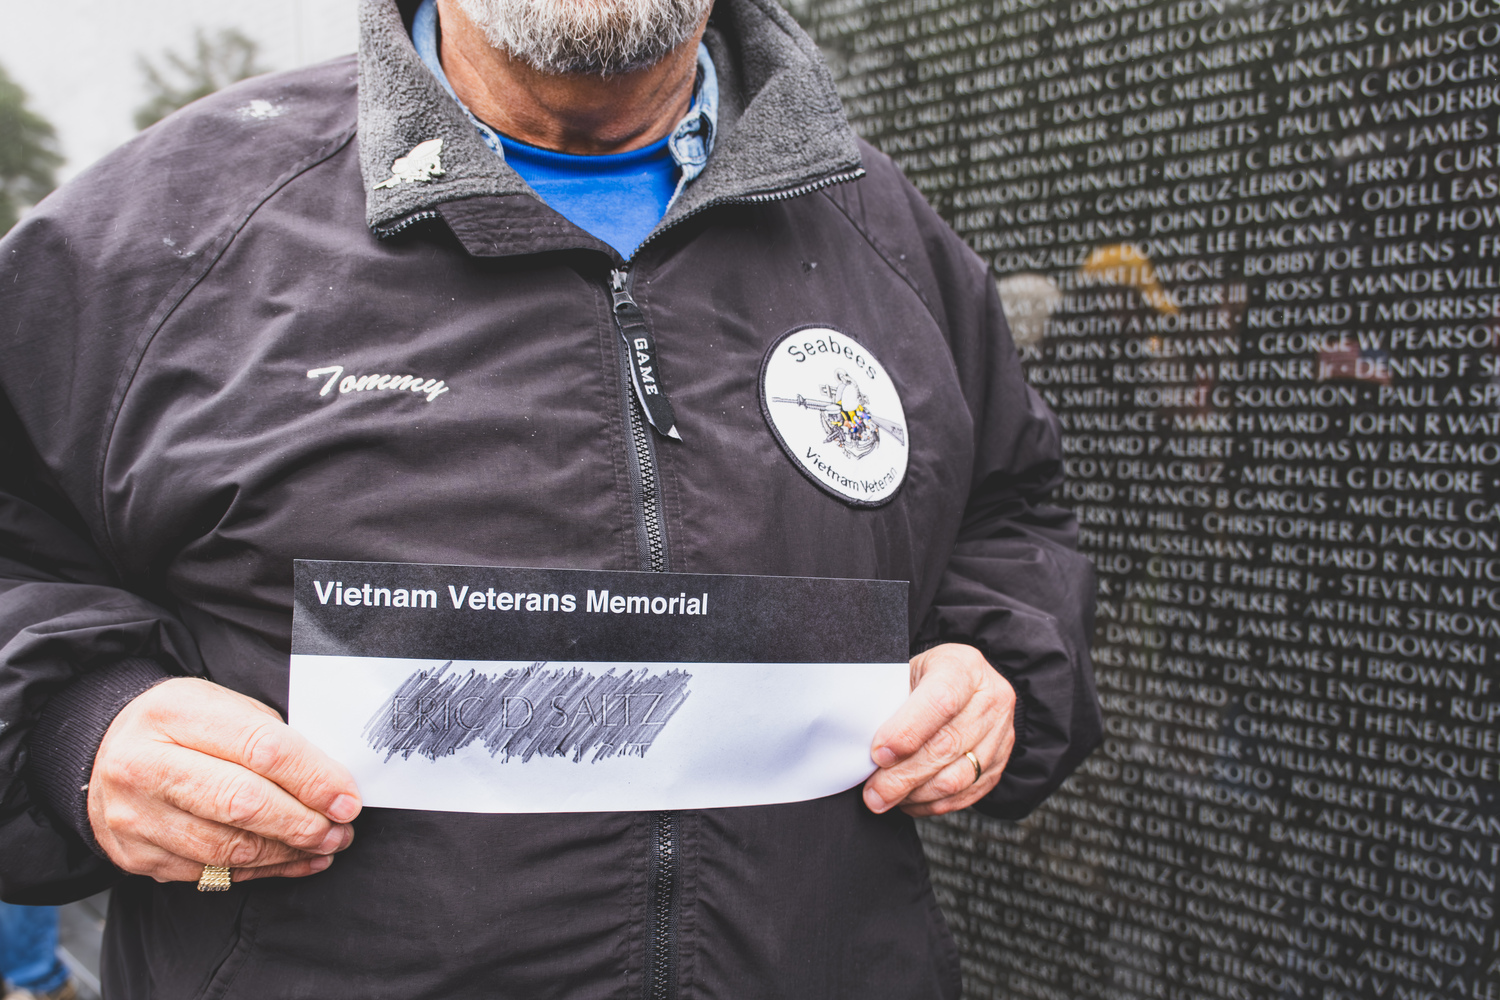 Vietnam veteran Thomas Coughlin makes an etching of a fallen comrade. MARK CHAMBERLAIN